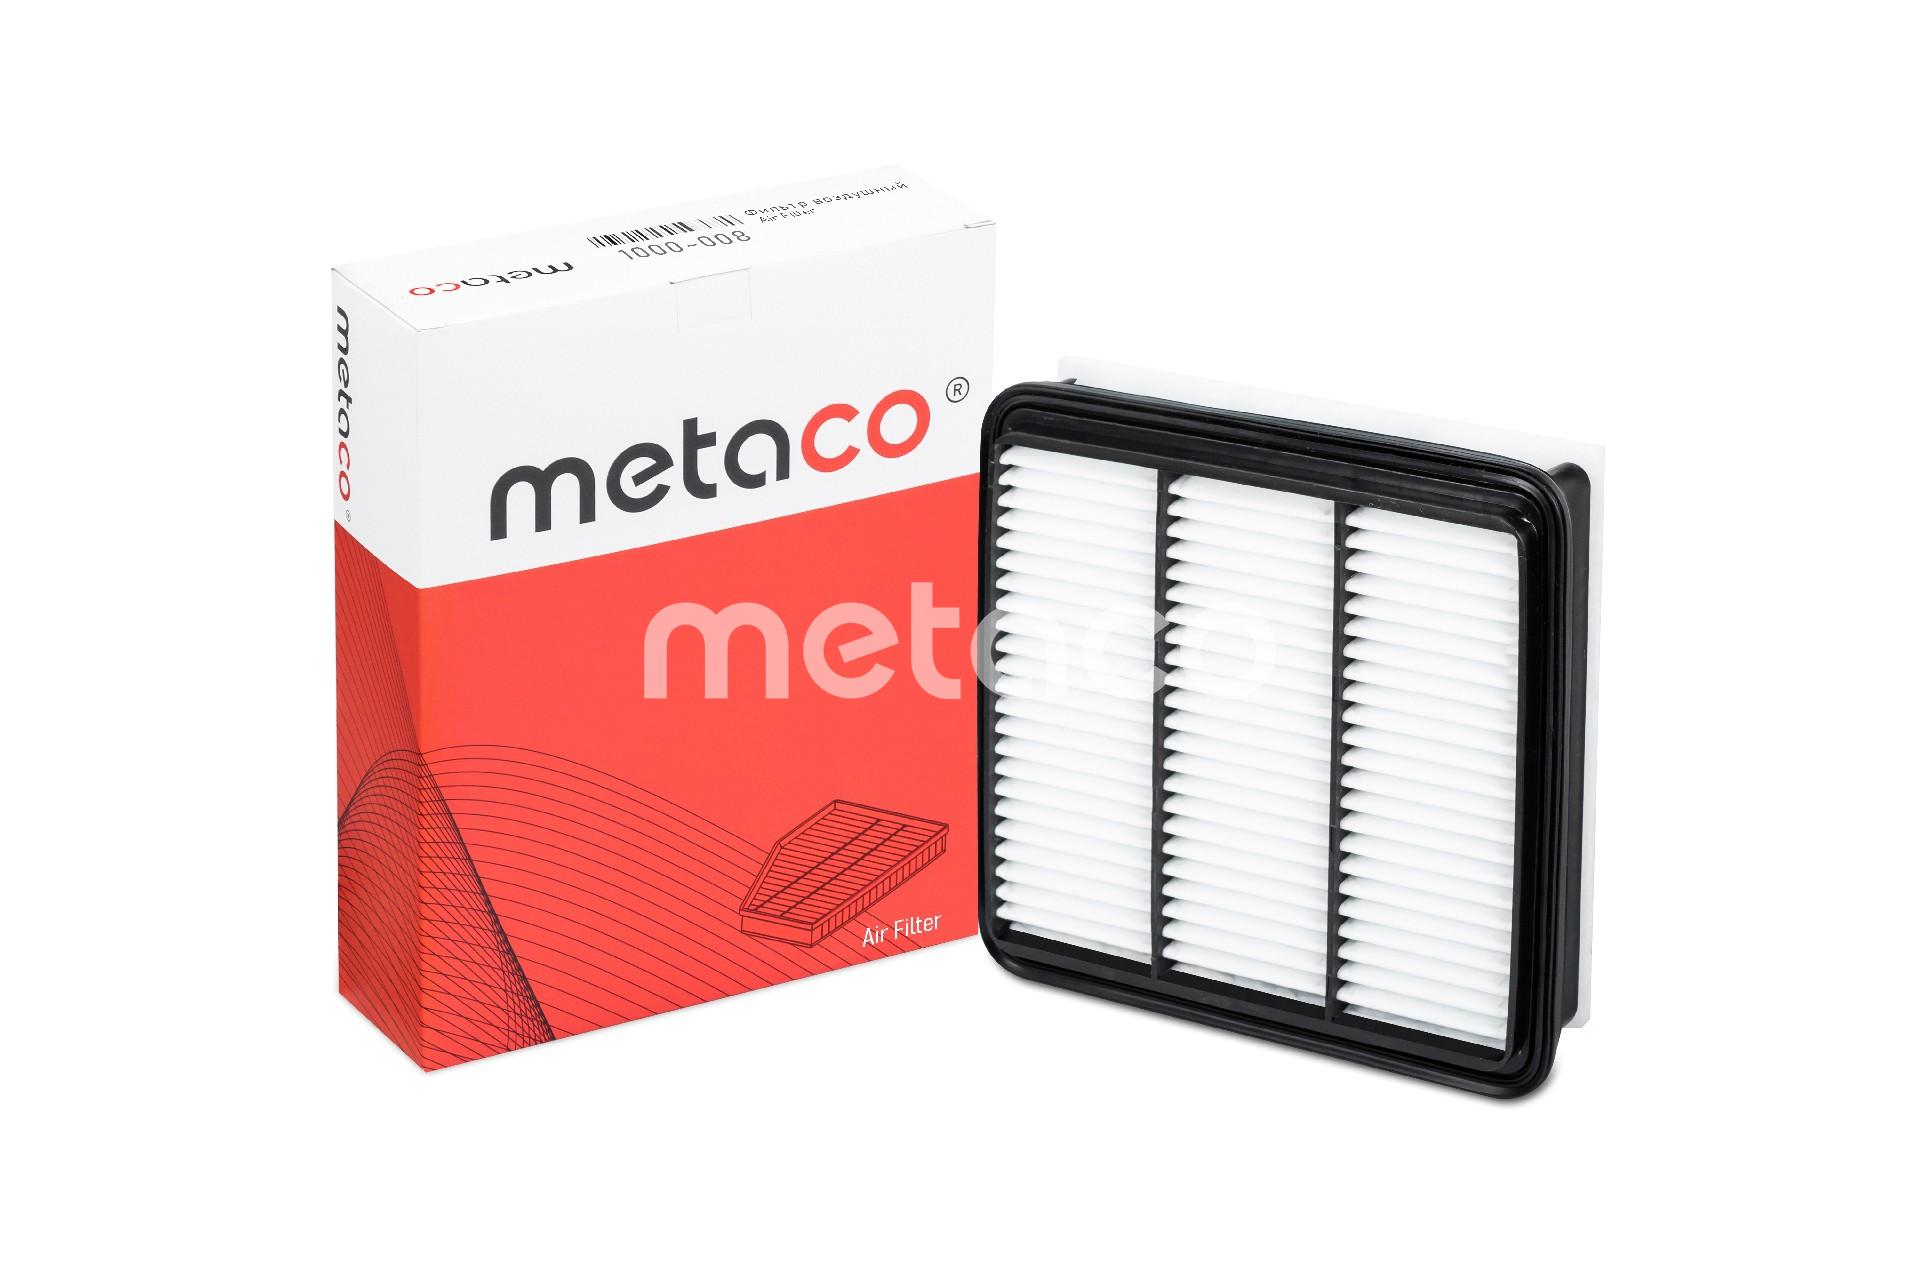 Metaco 1000-008 Mitsubishi 1500098, 1500A358, 1500A098, X1500A098